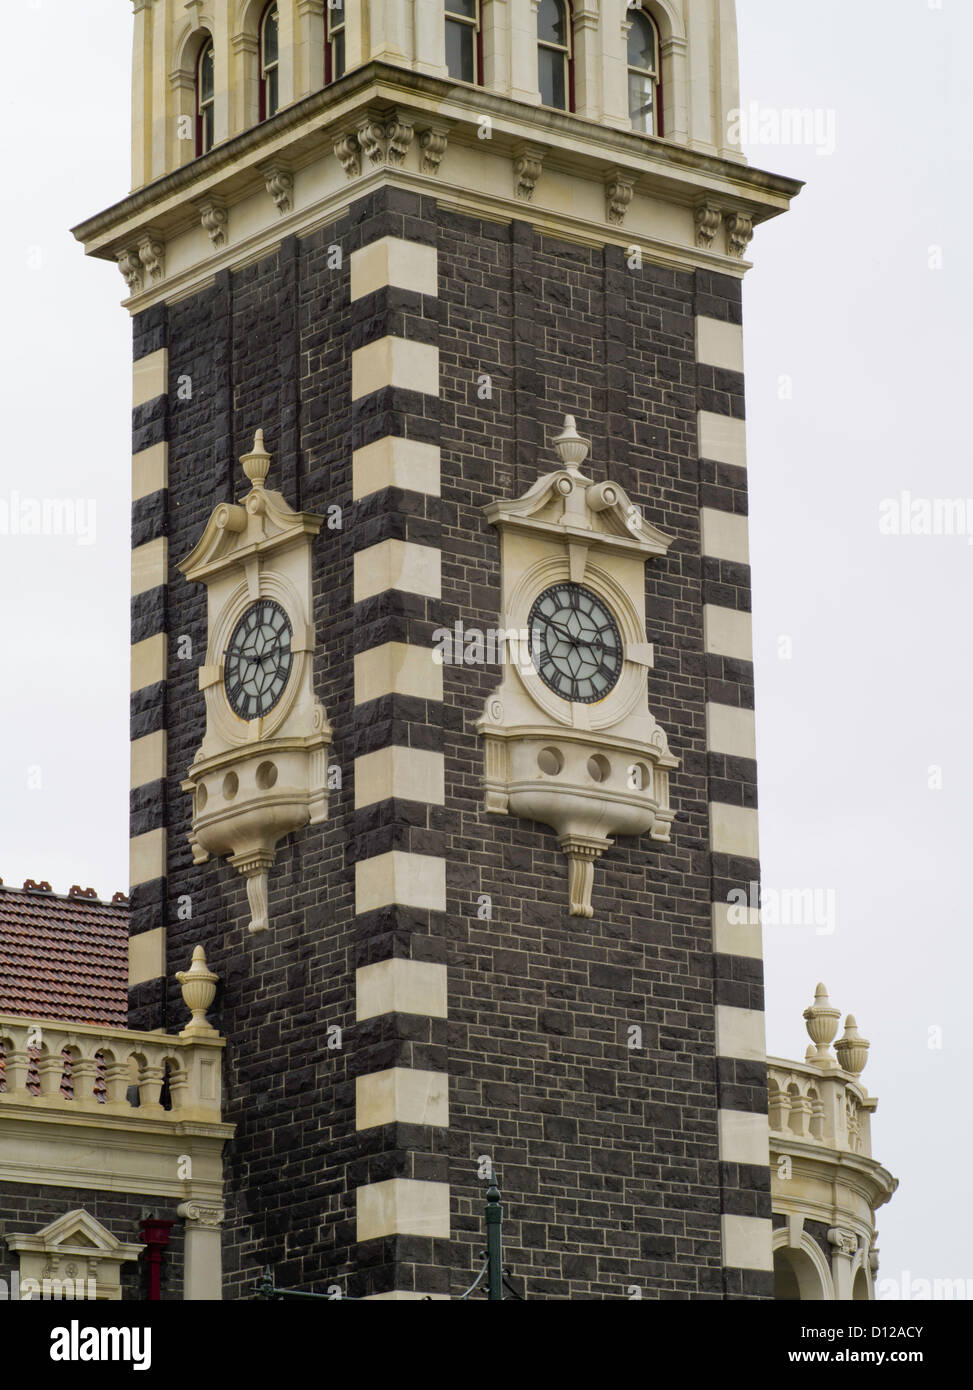 The clocktower of the famous Dunedin Railway Station; Dunedin, Otago, New Zealand. Stock Photo